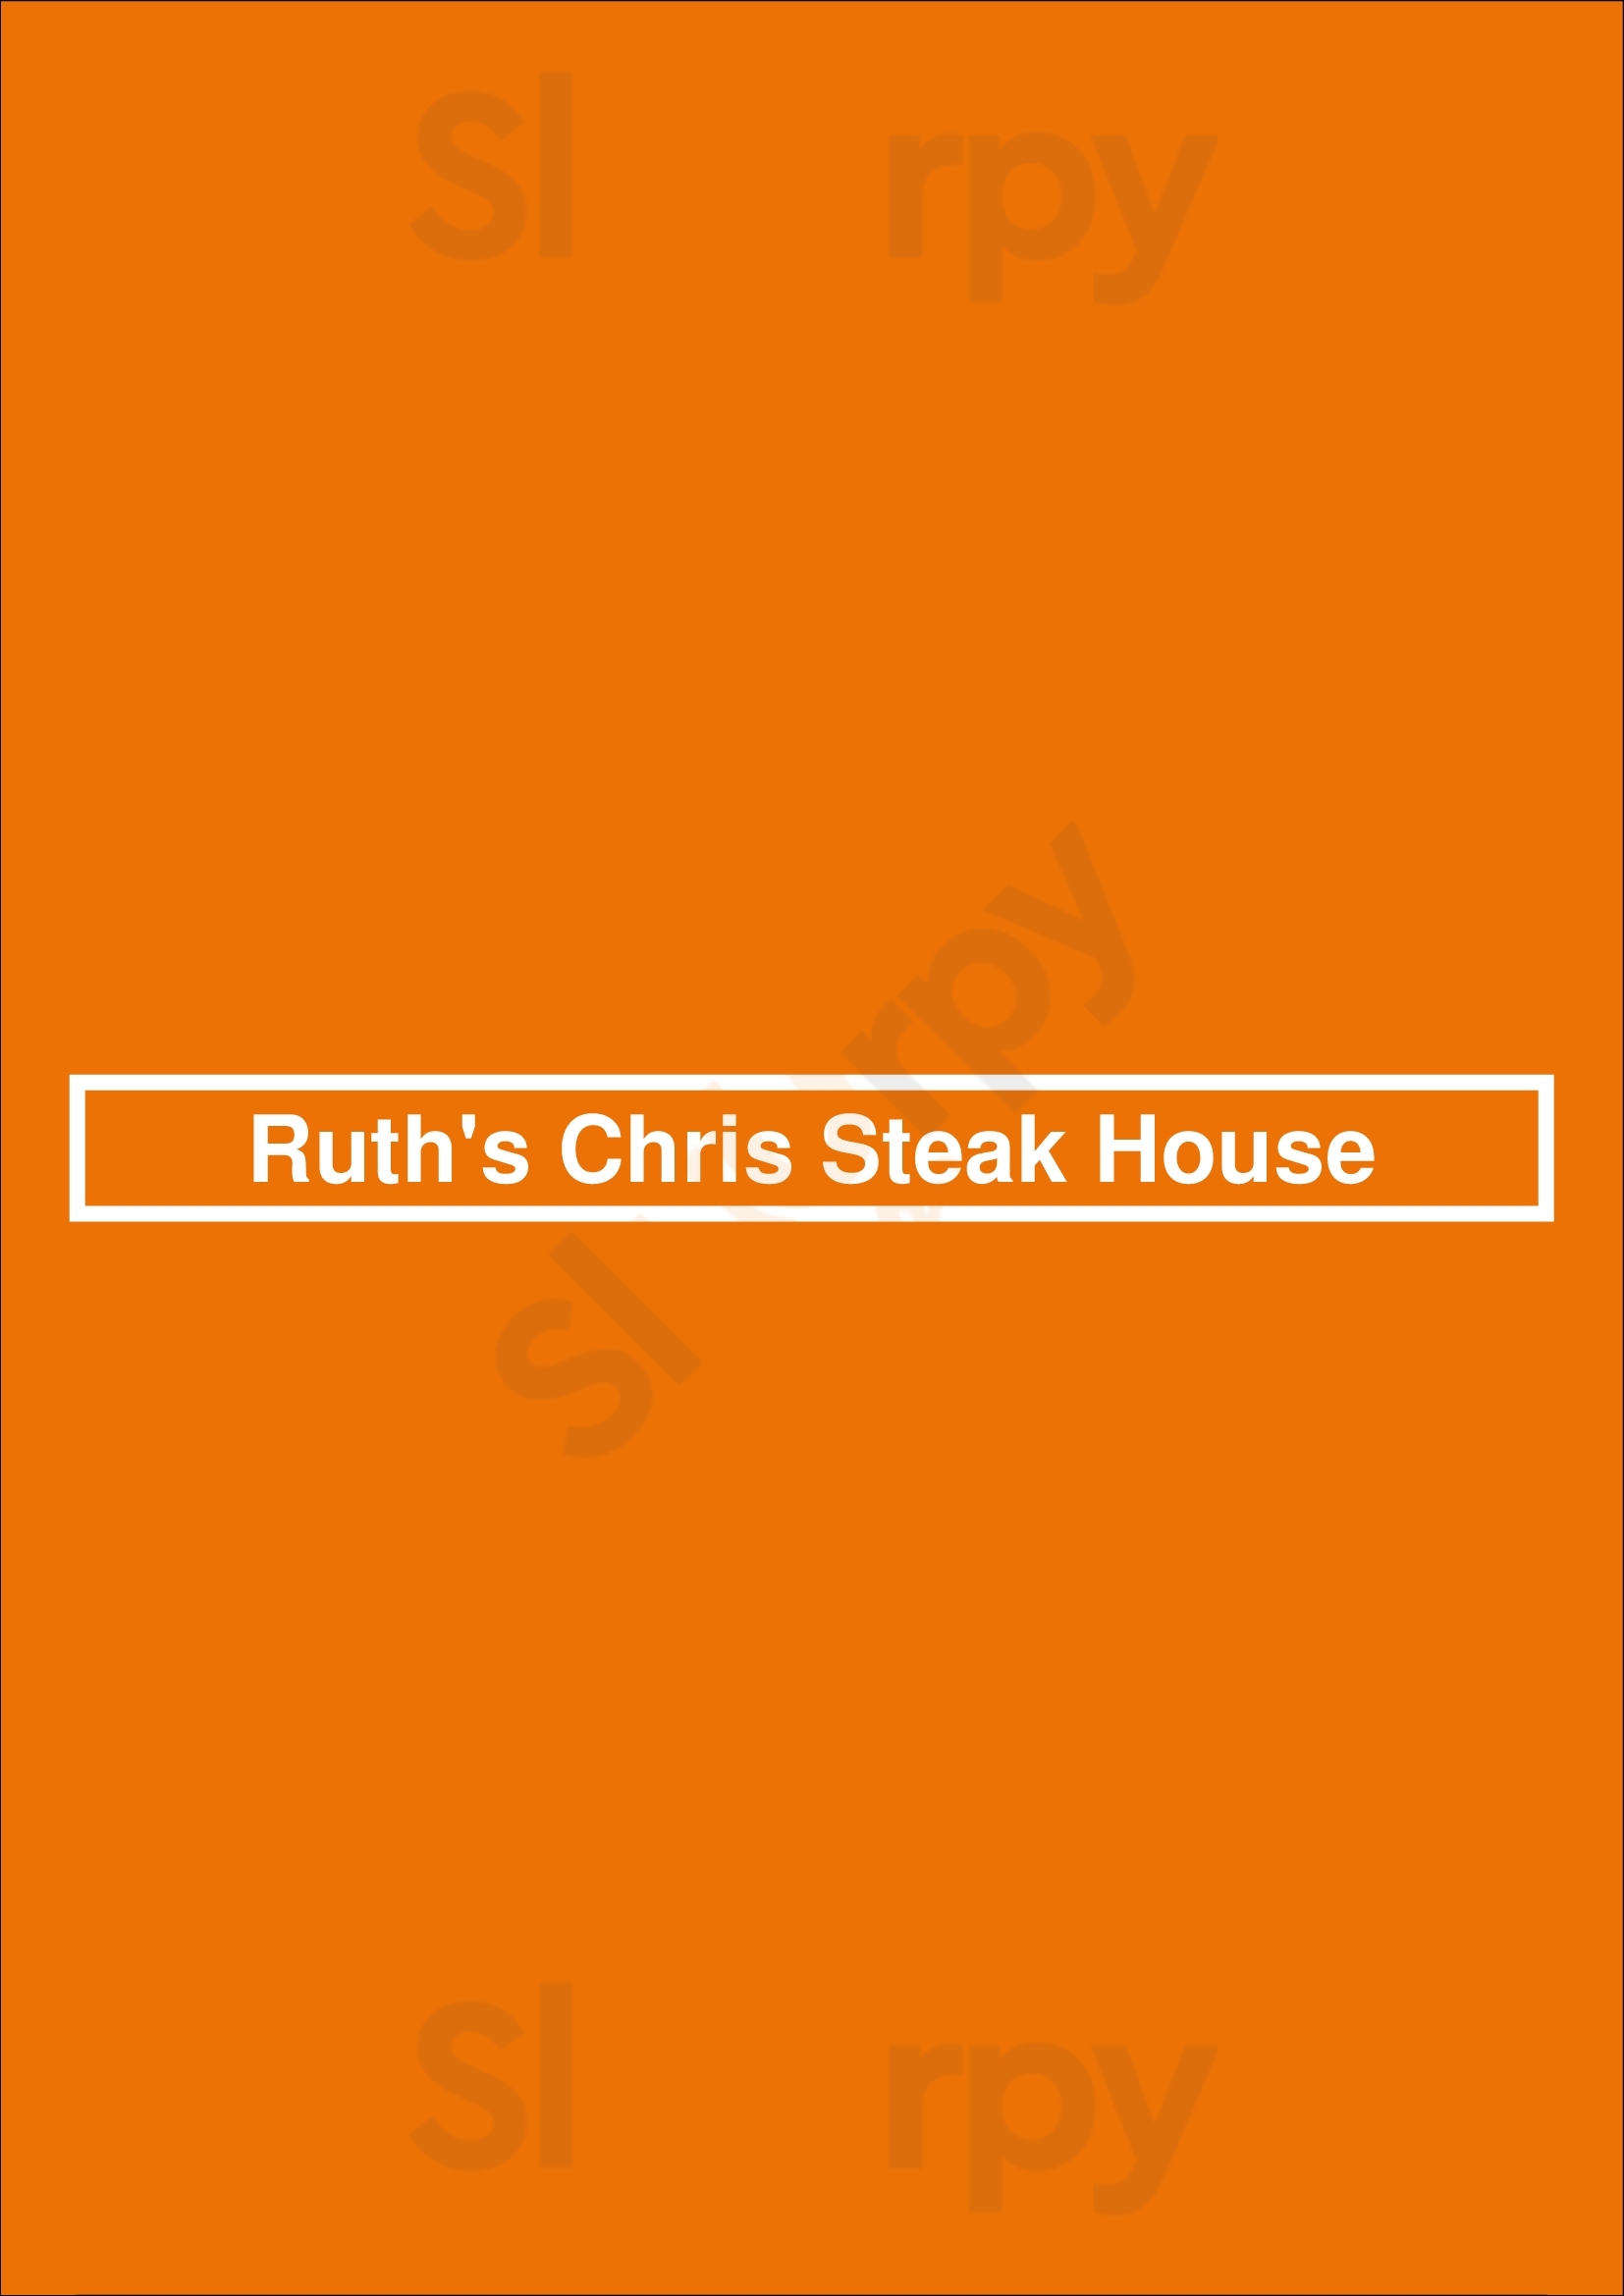 Ruth's Chris Steak House Charlotte Menu - 1